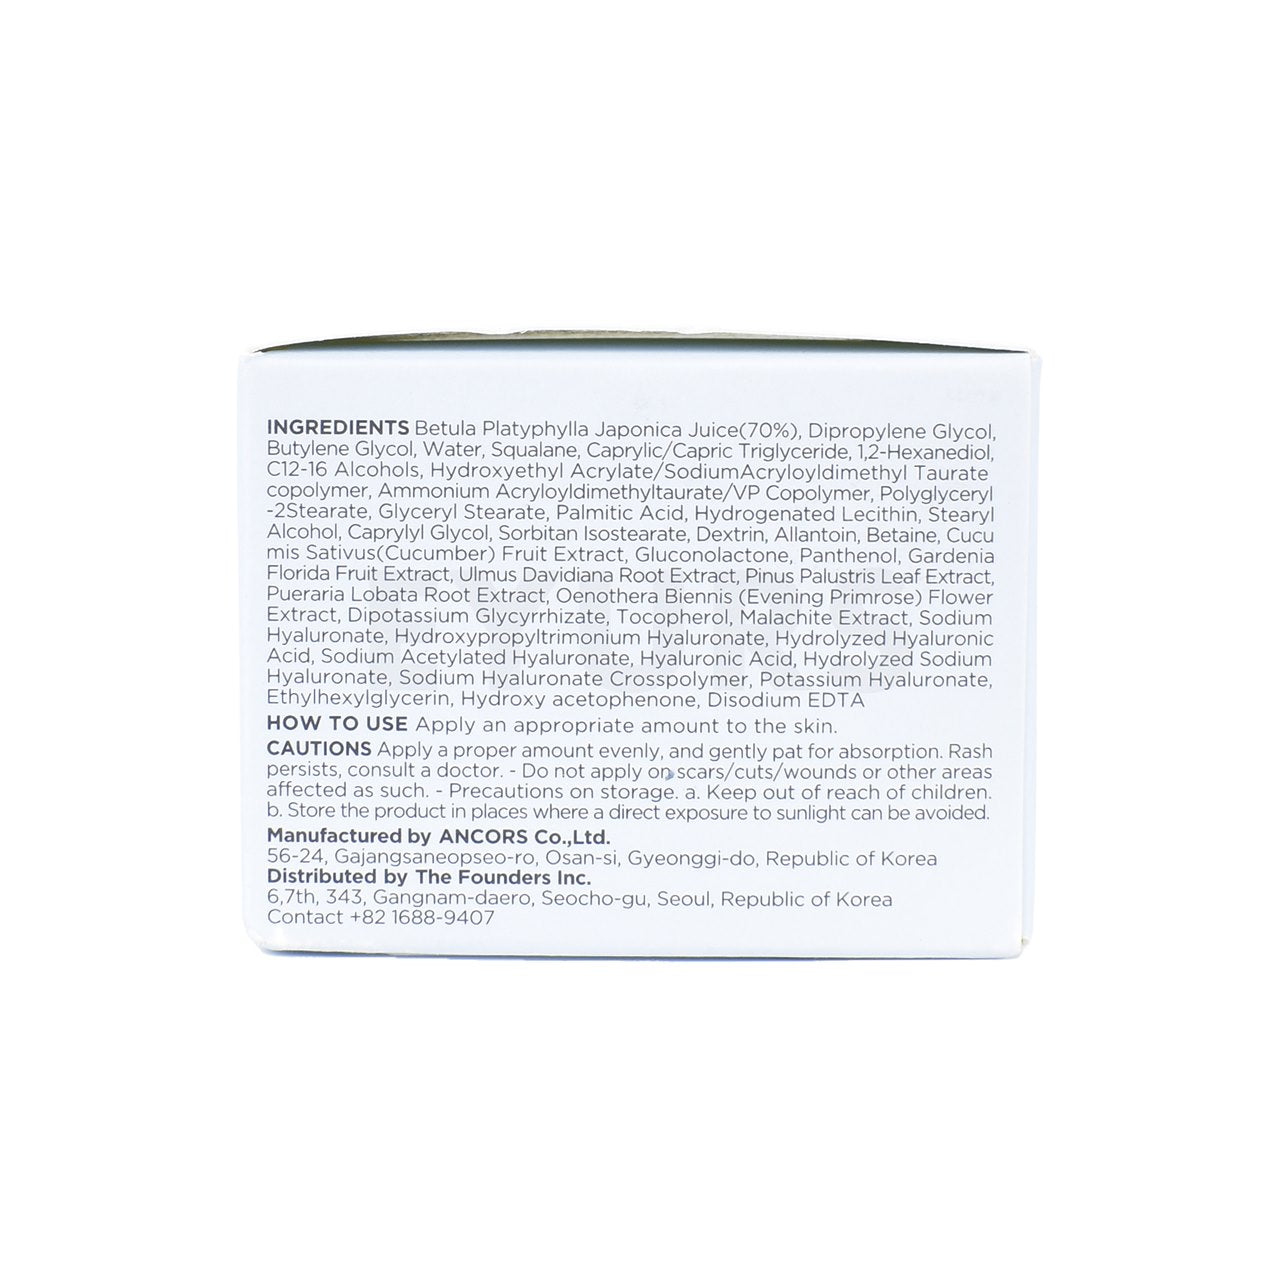  anua birch 70 moisture boosting cream right side packaging box